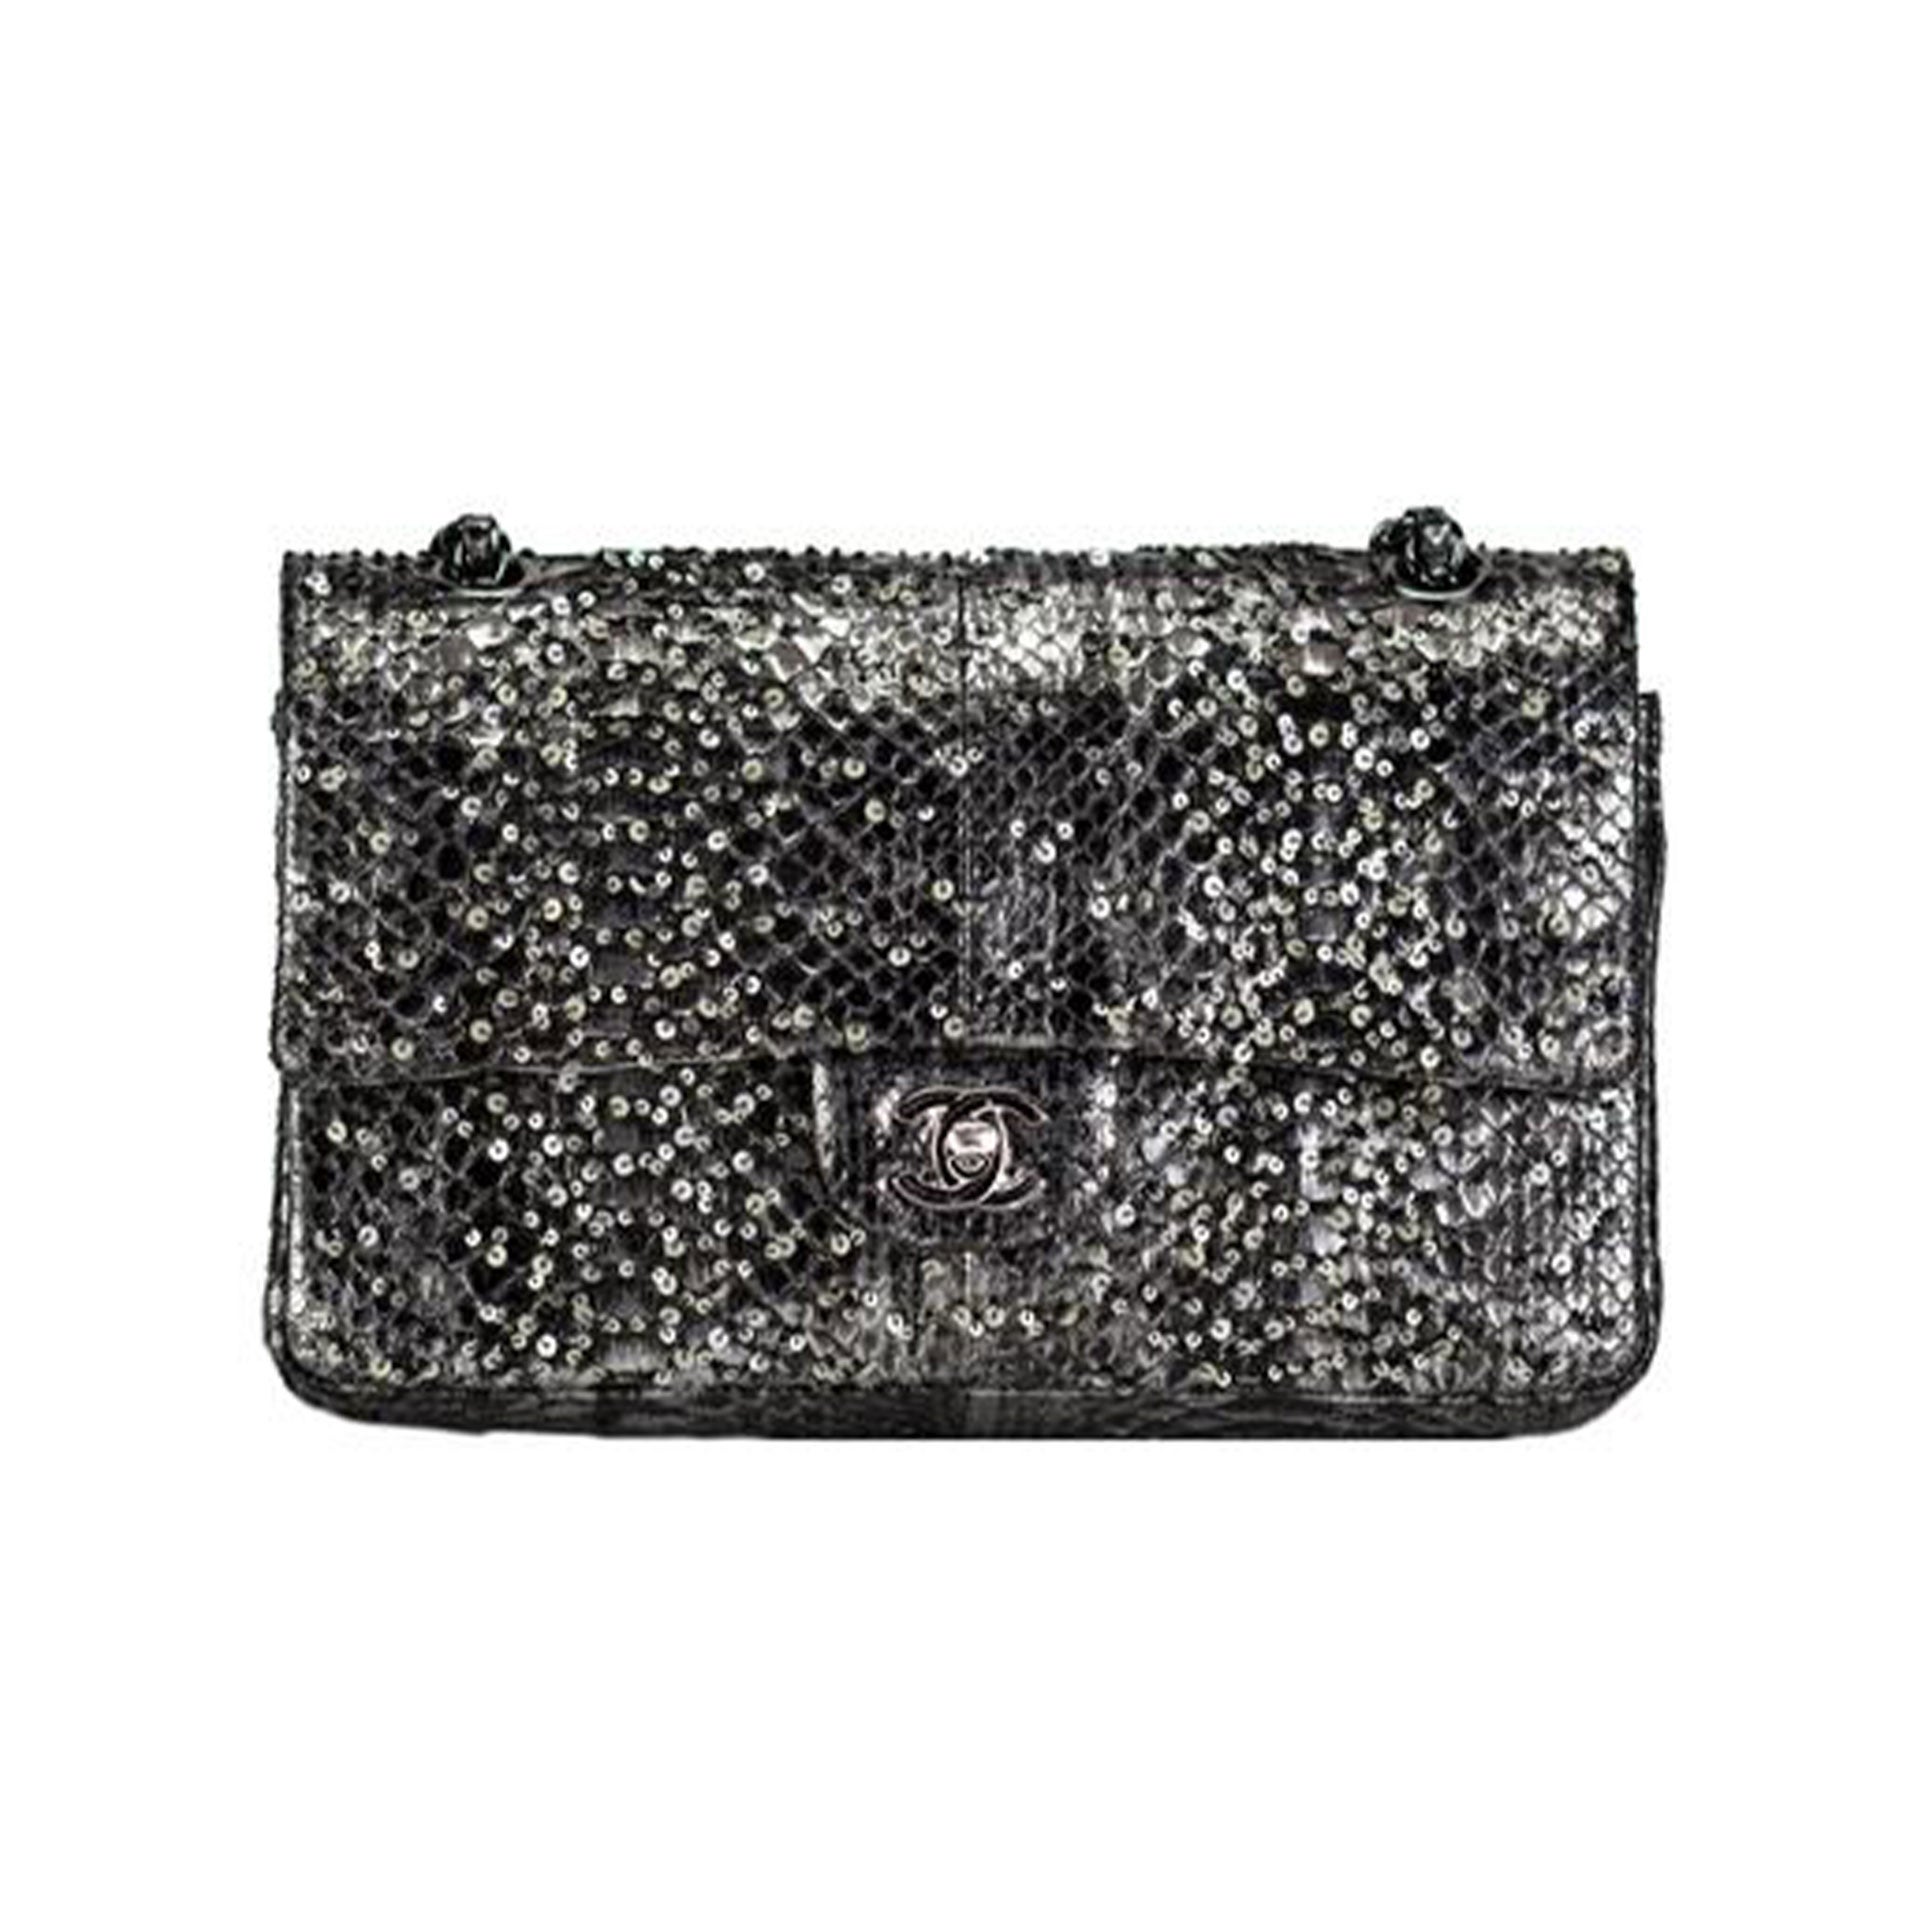 Chanel 2014 Classic Flap Exotic Limited Edition Metallic Grey Python Bag